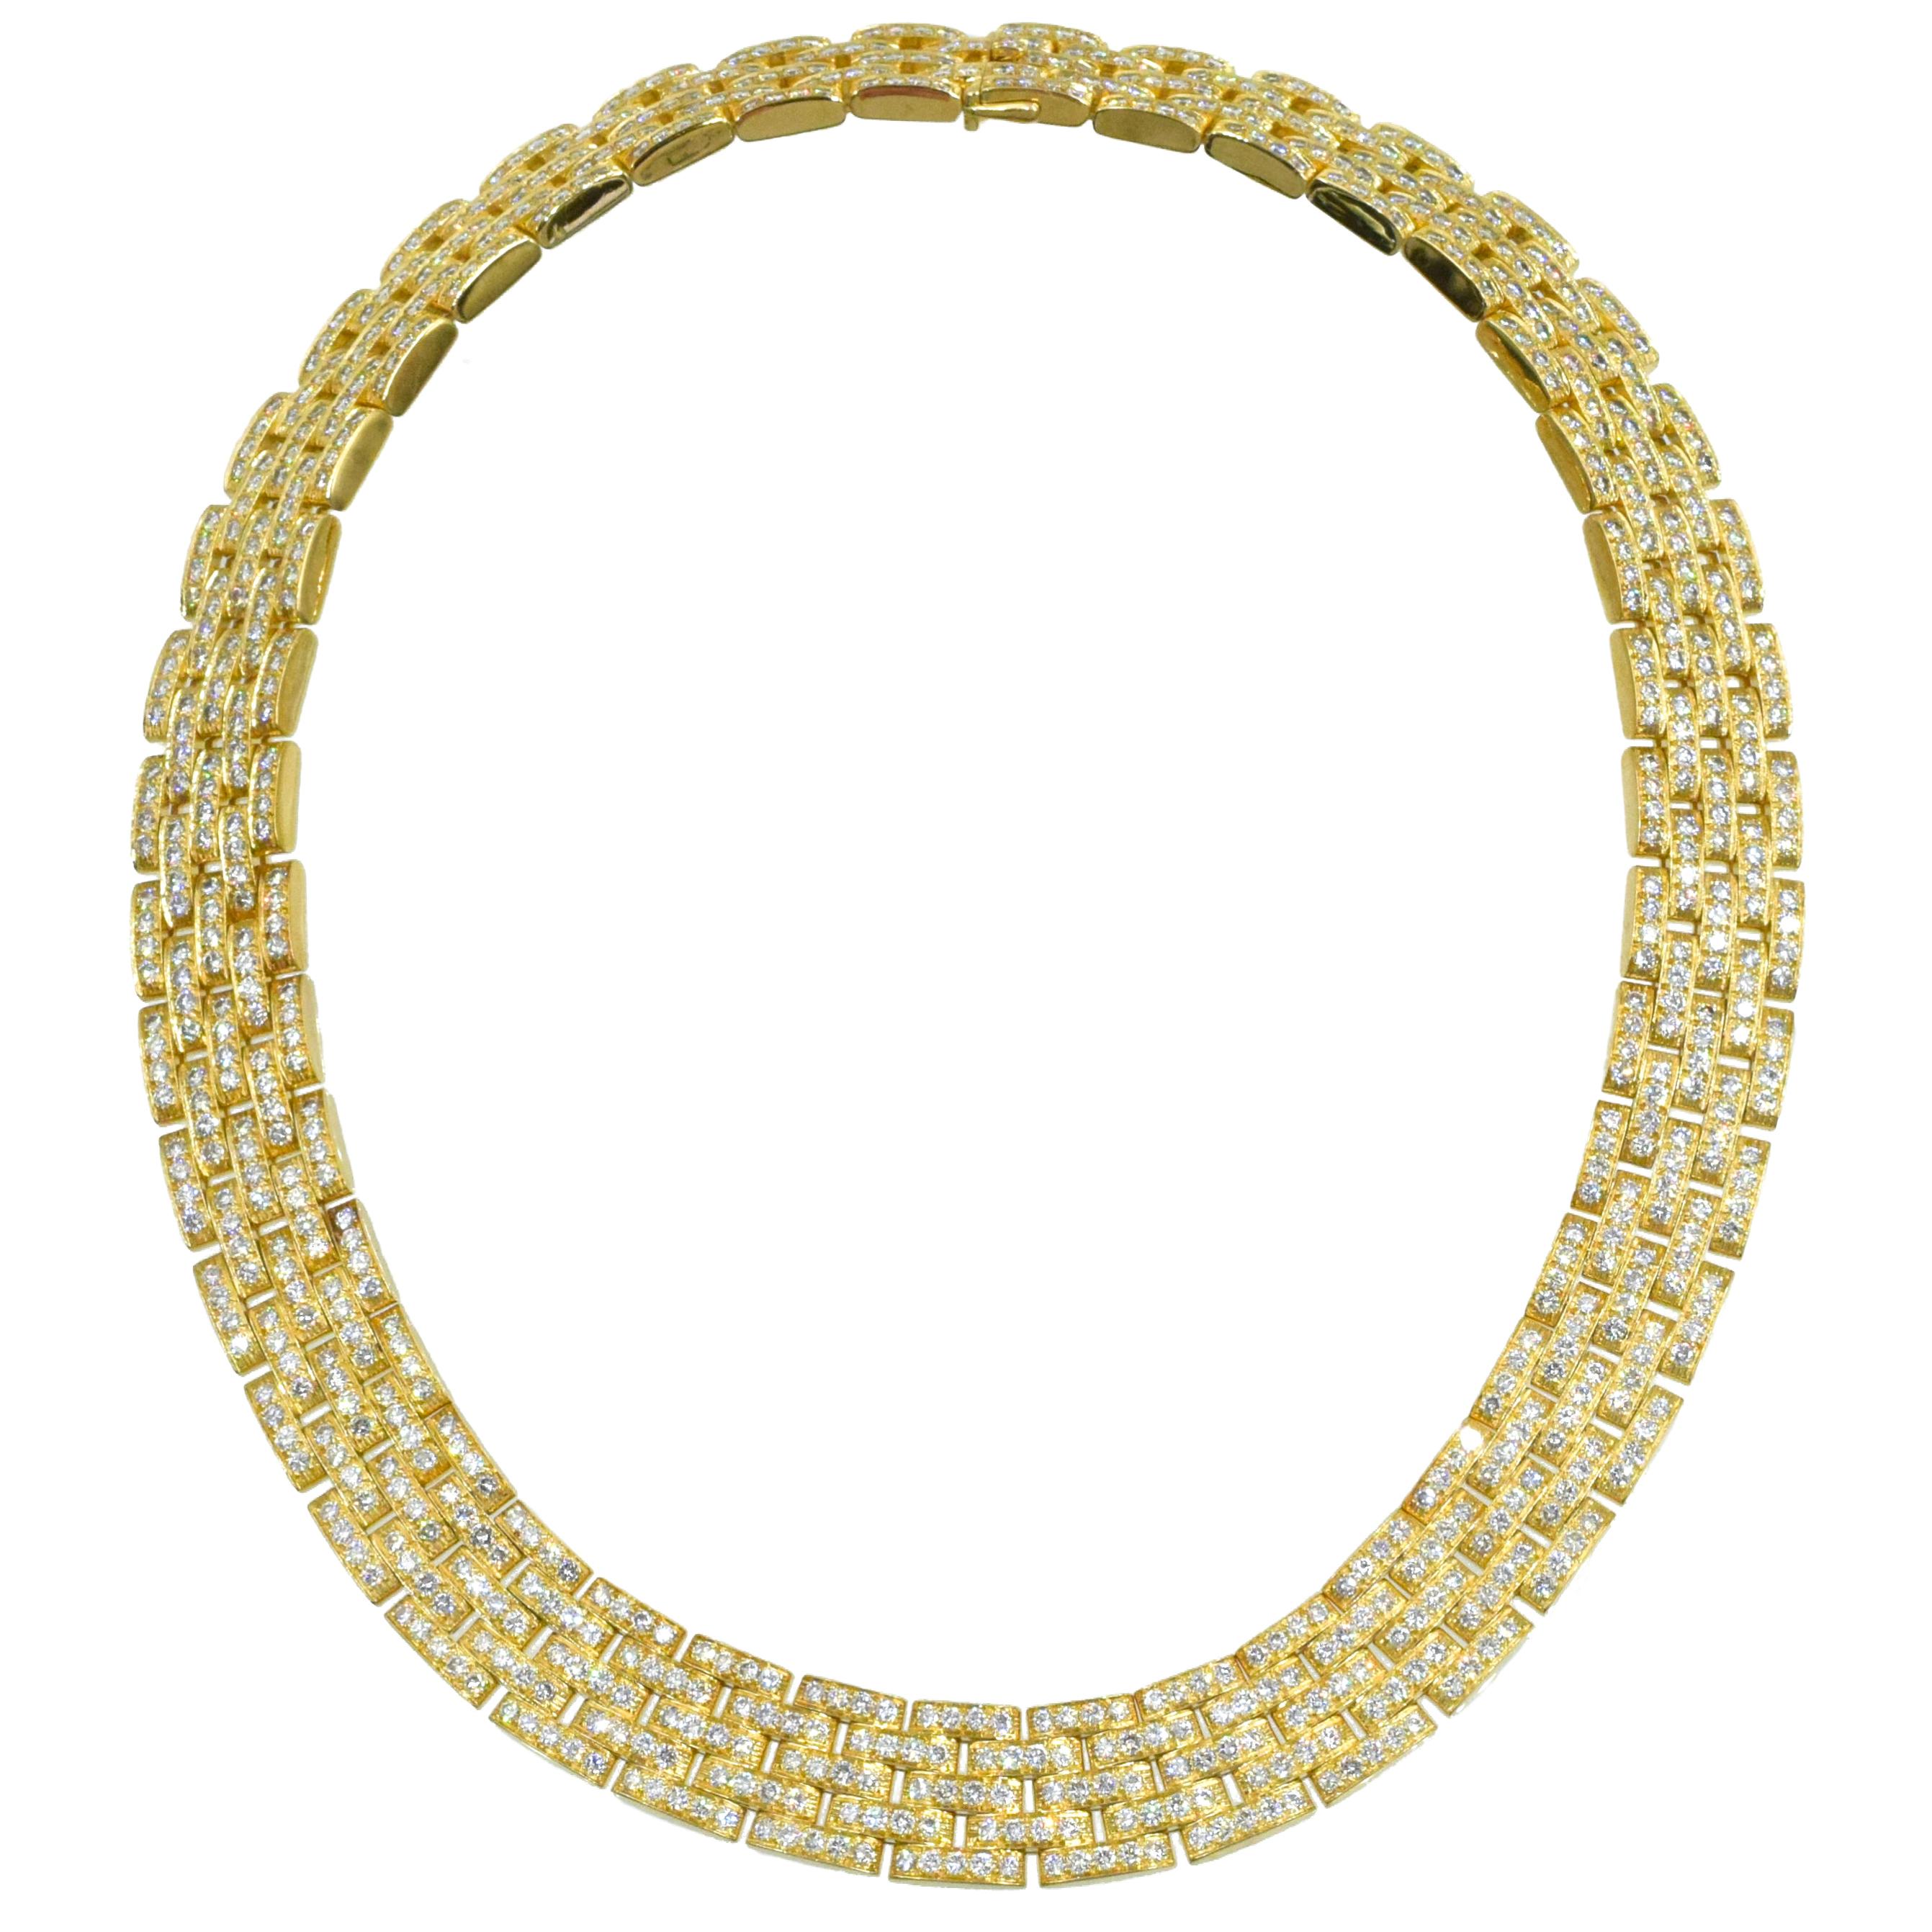 Cartier 'Panthère' Diamond Necklace, French